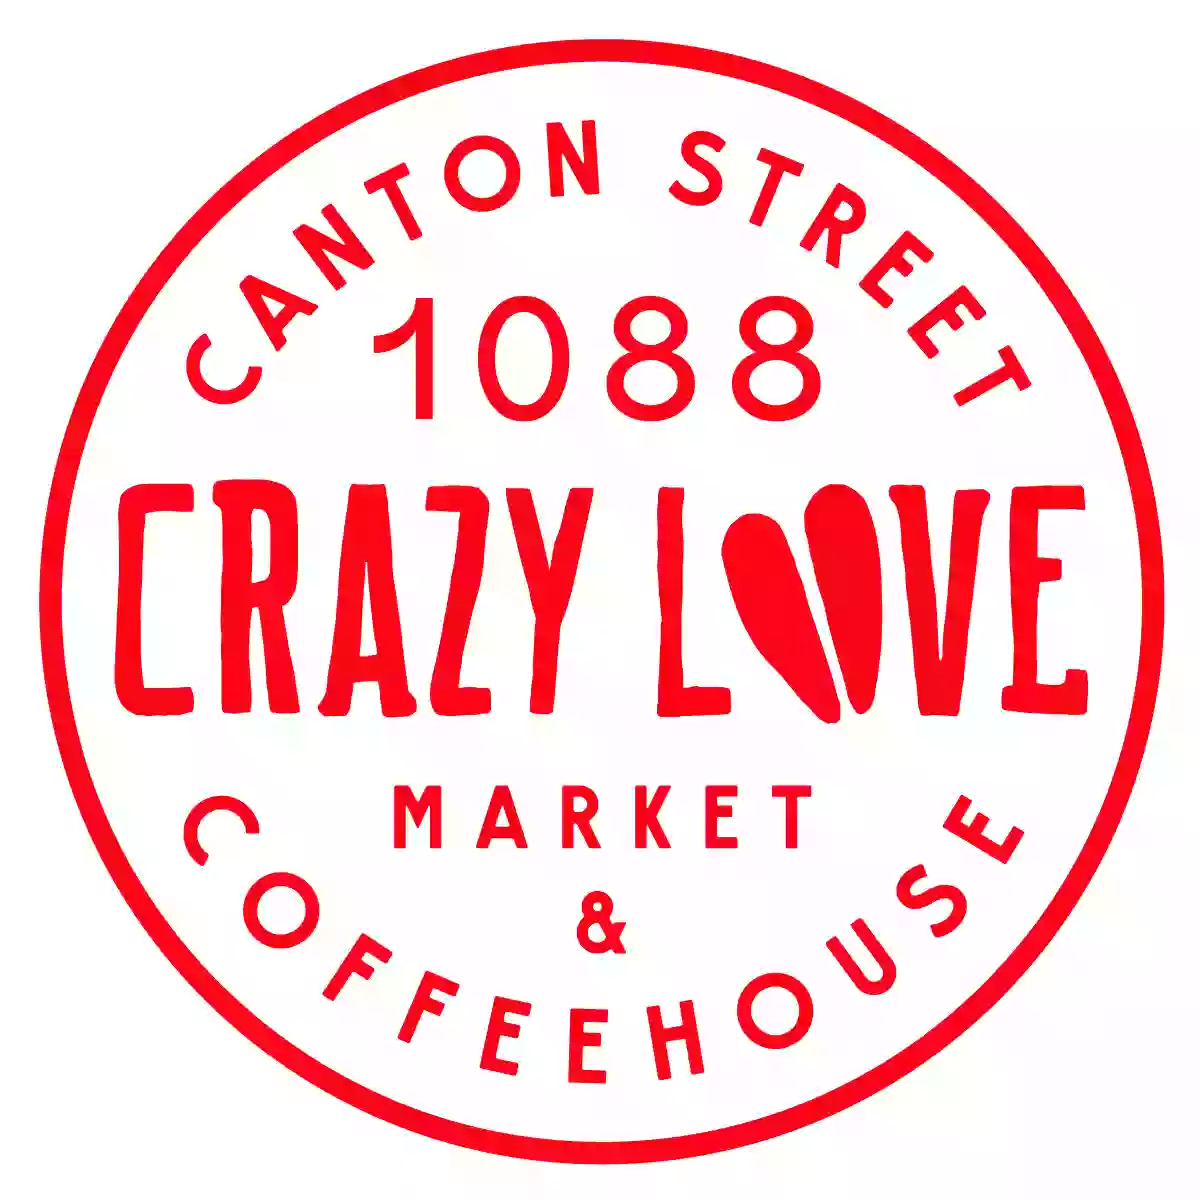 Crazy Love Coffee House